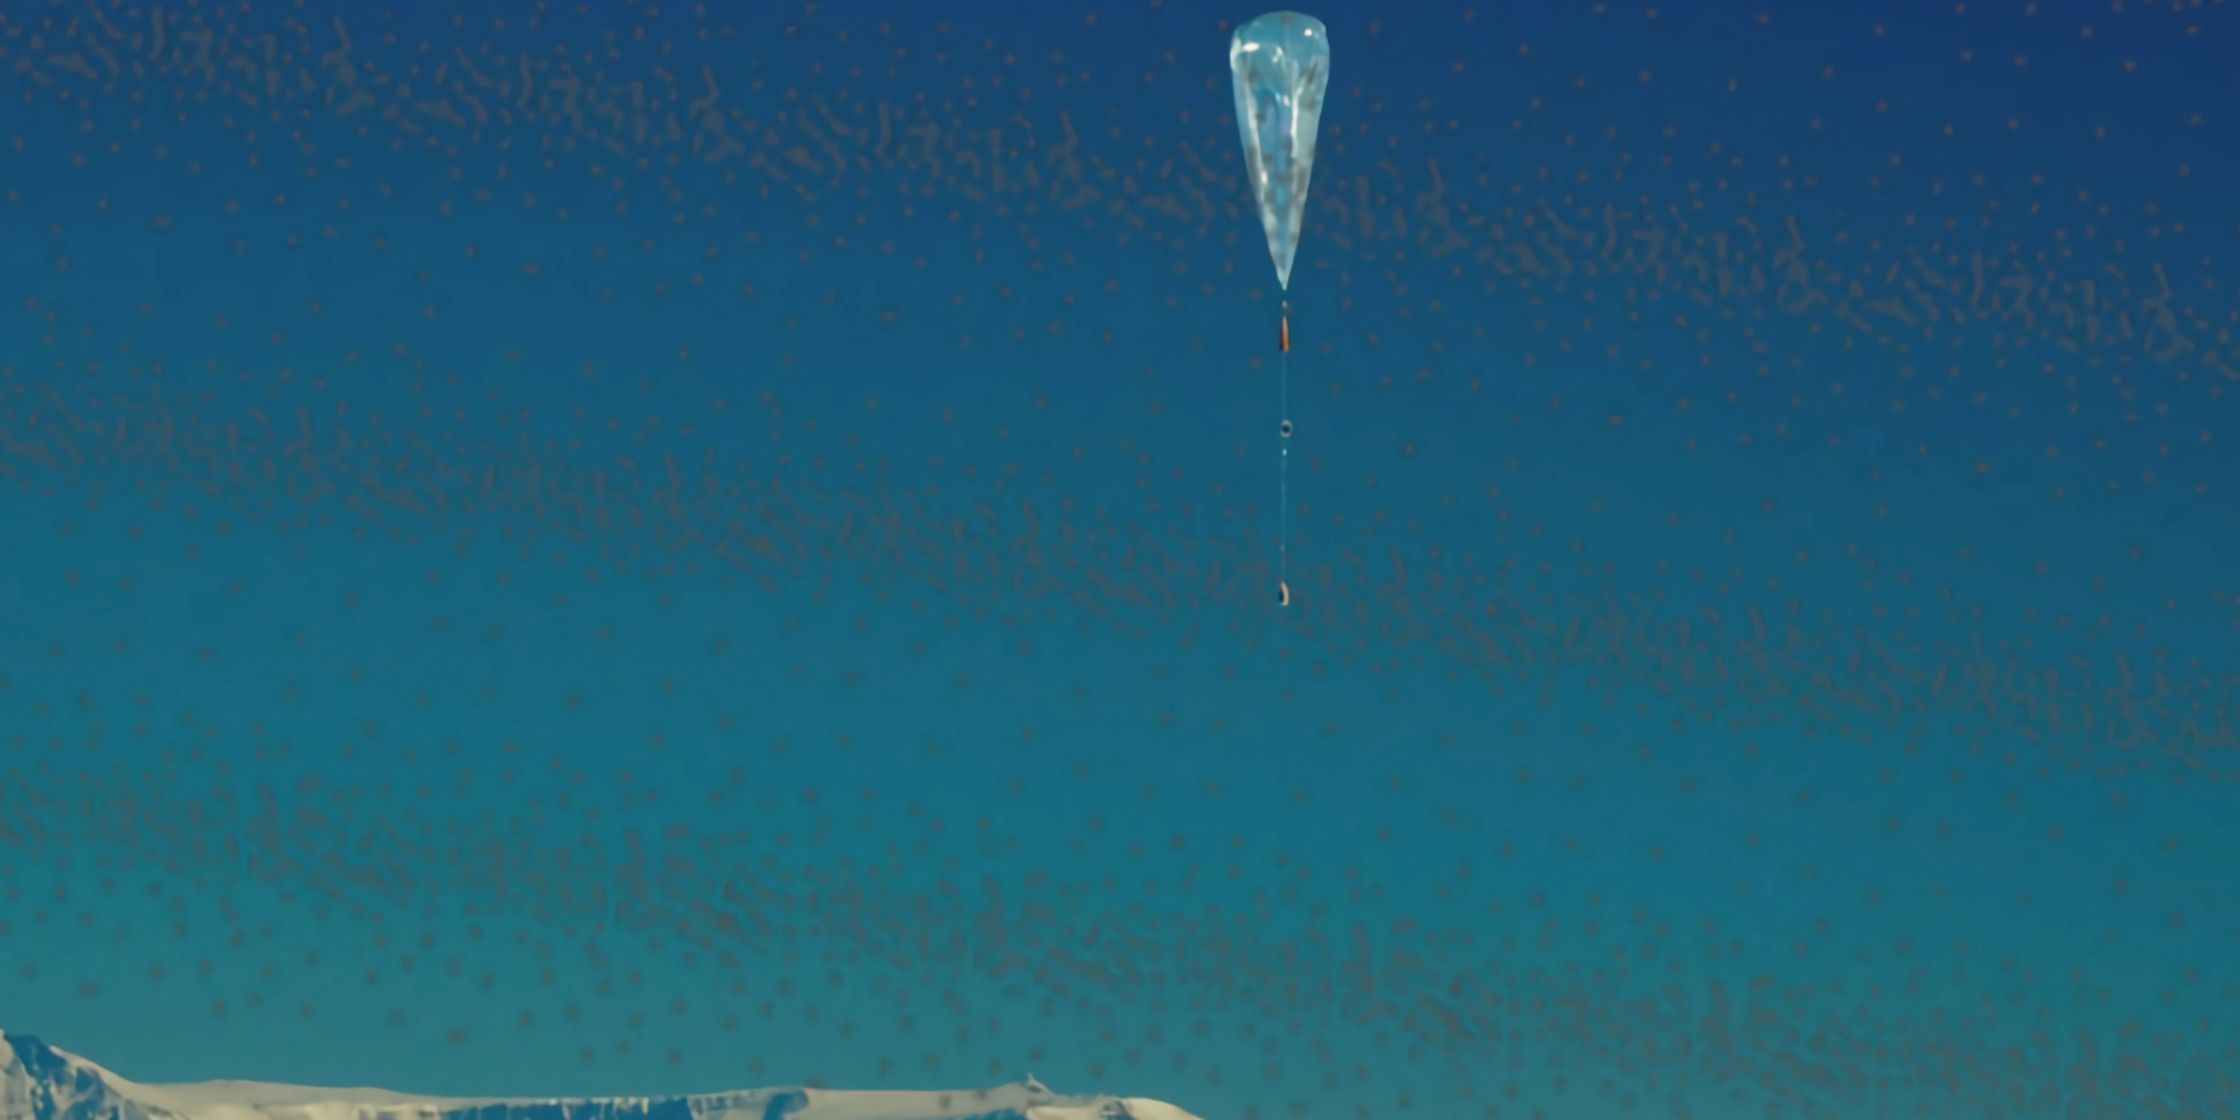 Balloons might help unlock Venusian mysteries